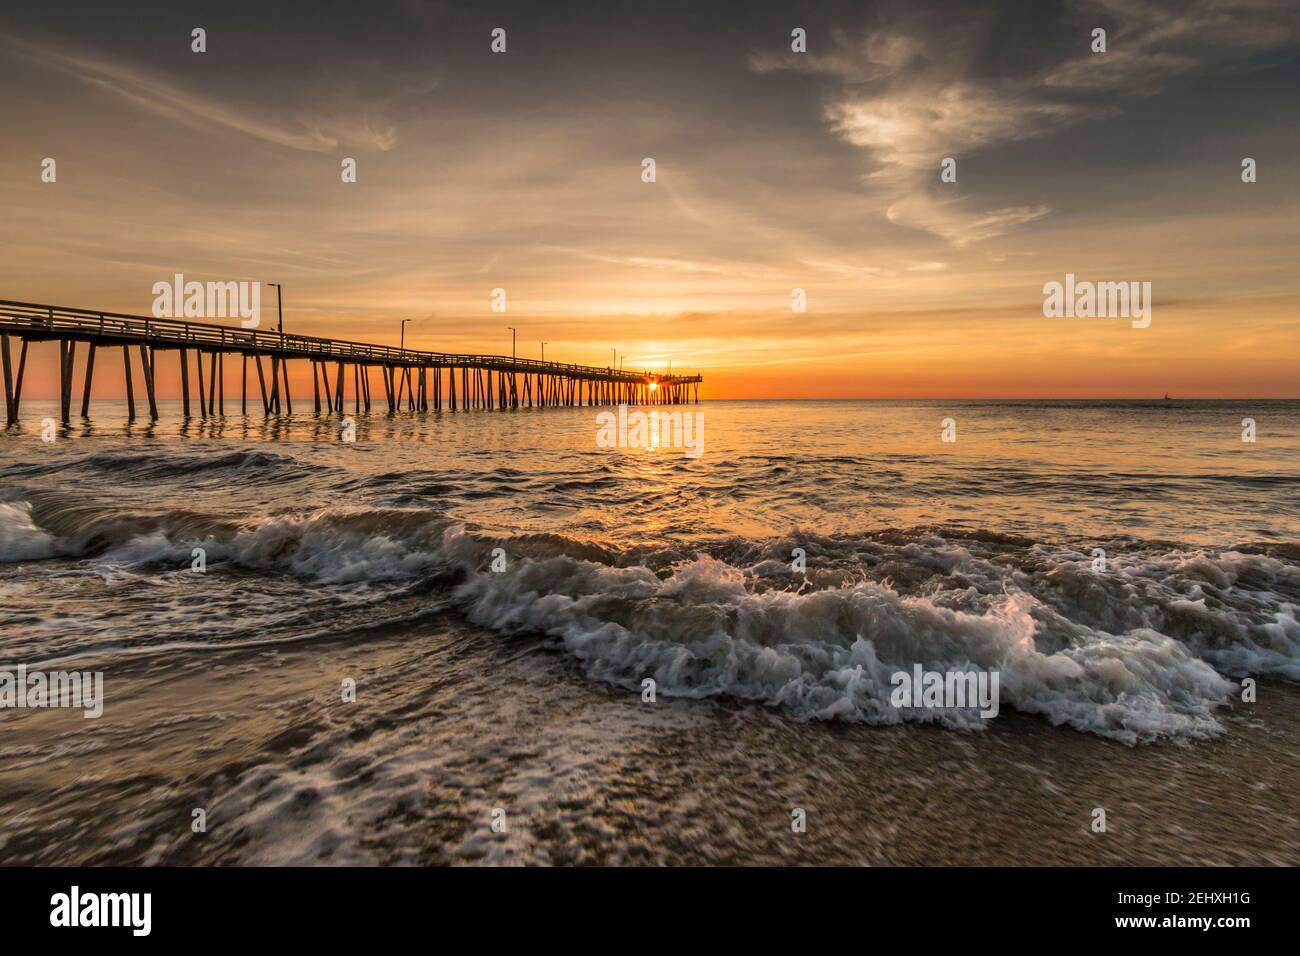 VA Virginia Beach Virginia Beach fishing pier at sunrise pier